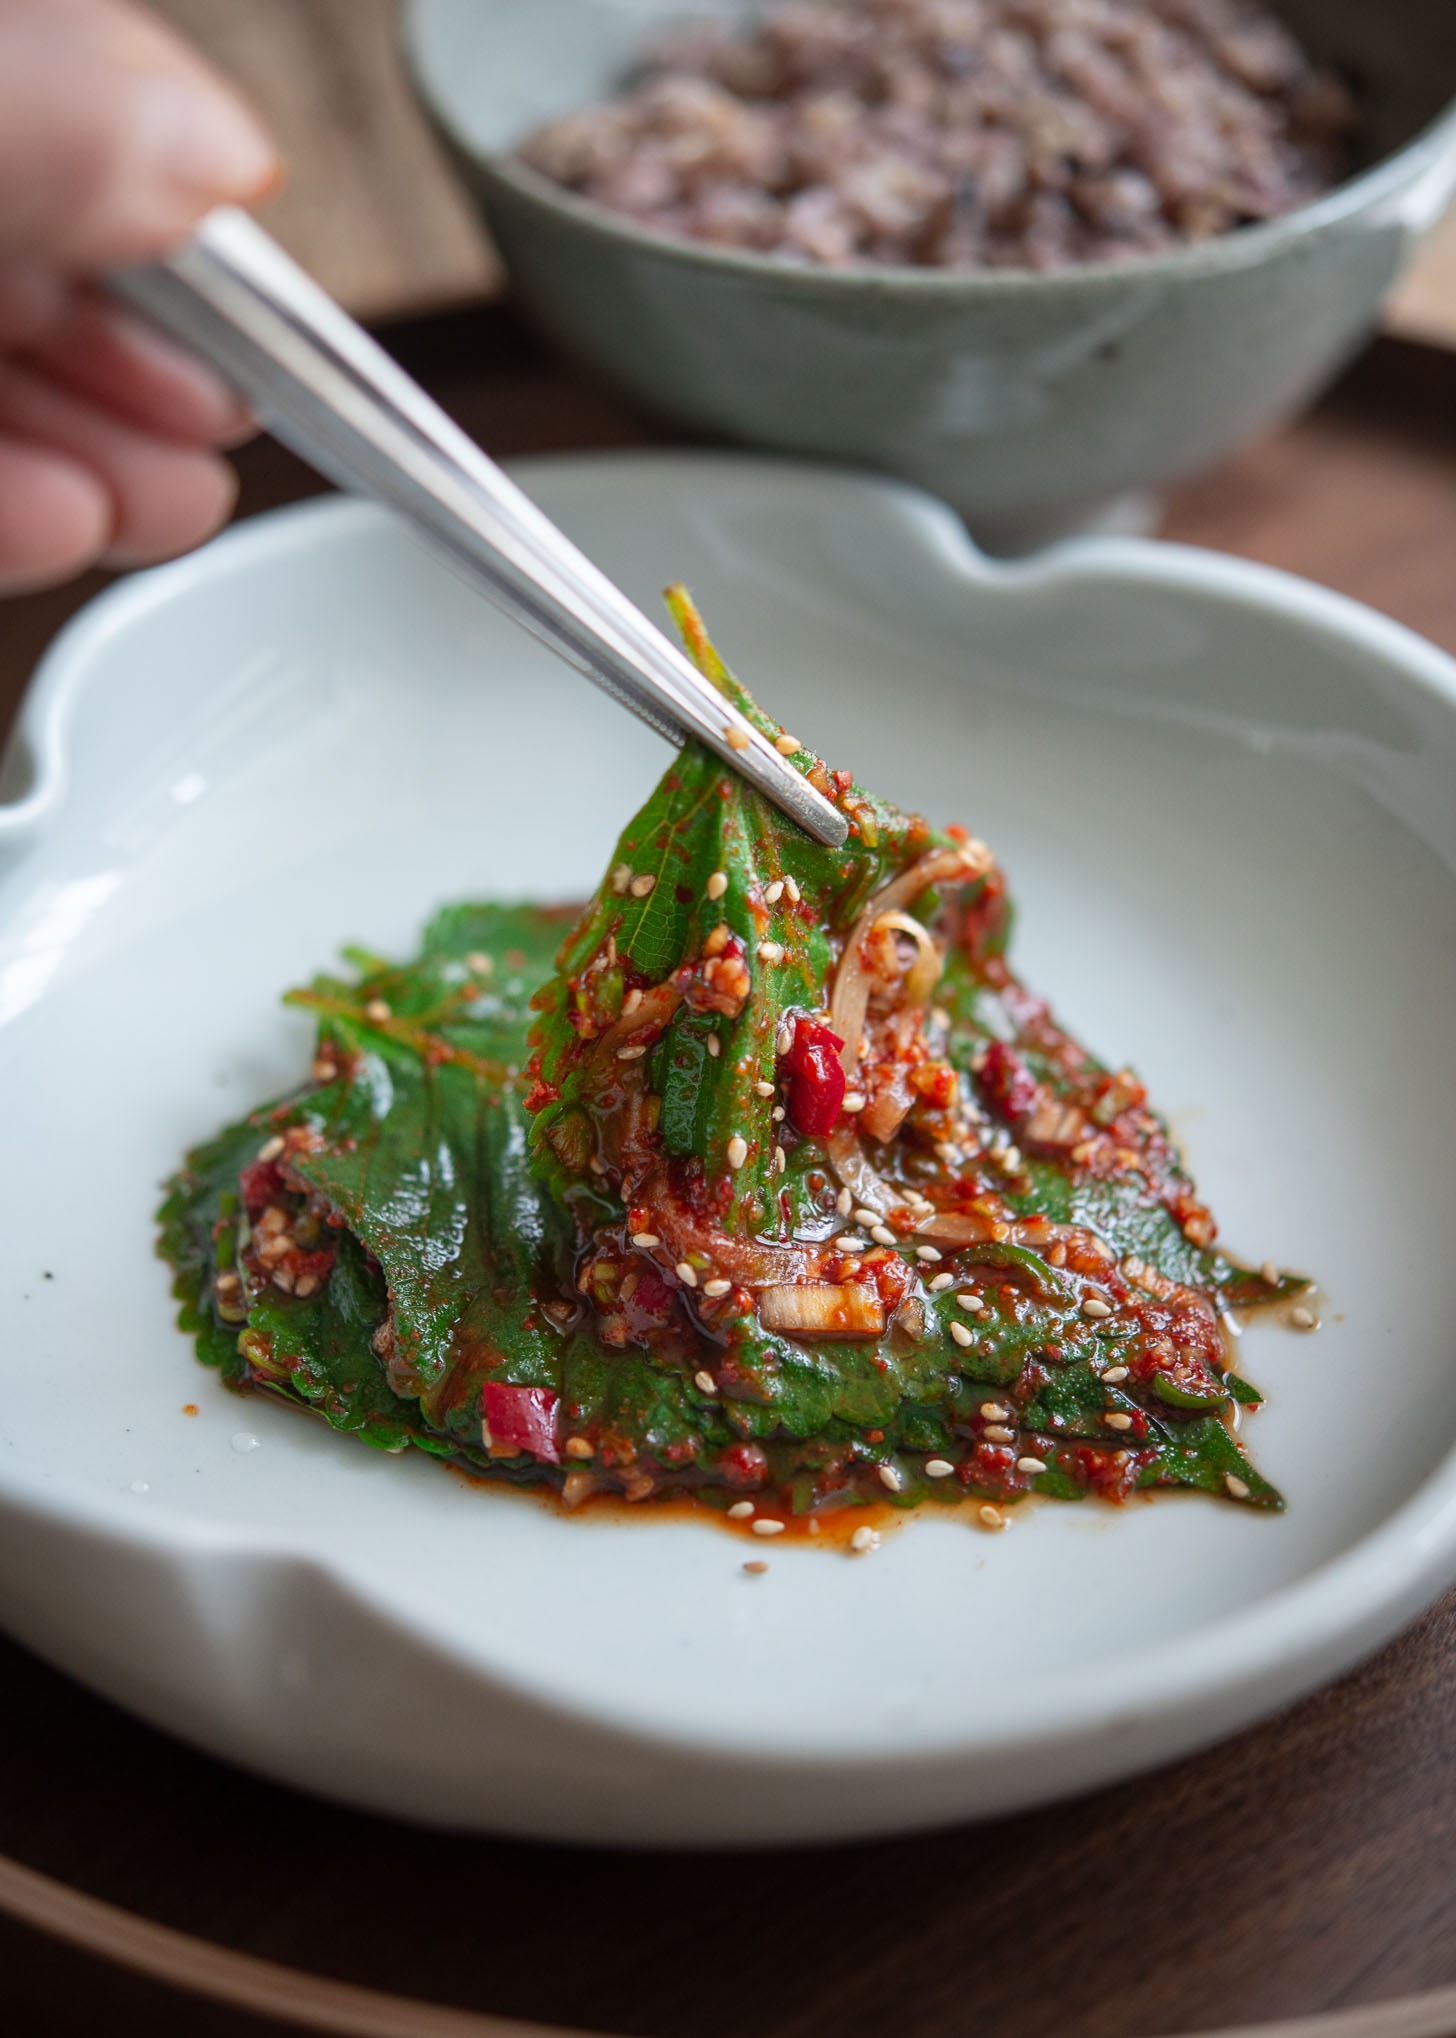 Perilla leaf kimchi known as Kaennip kimchi using chopstick to serve